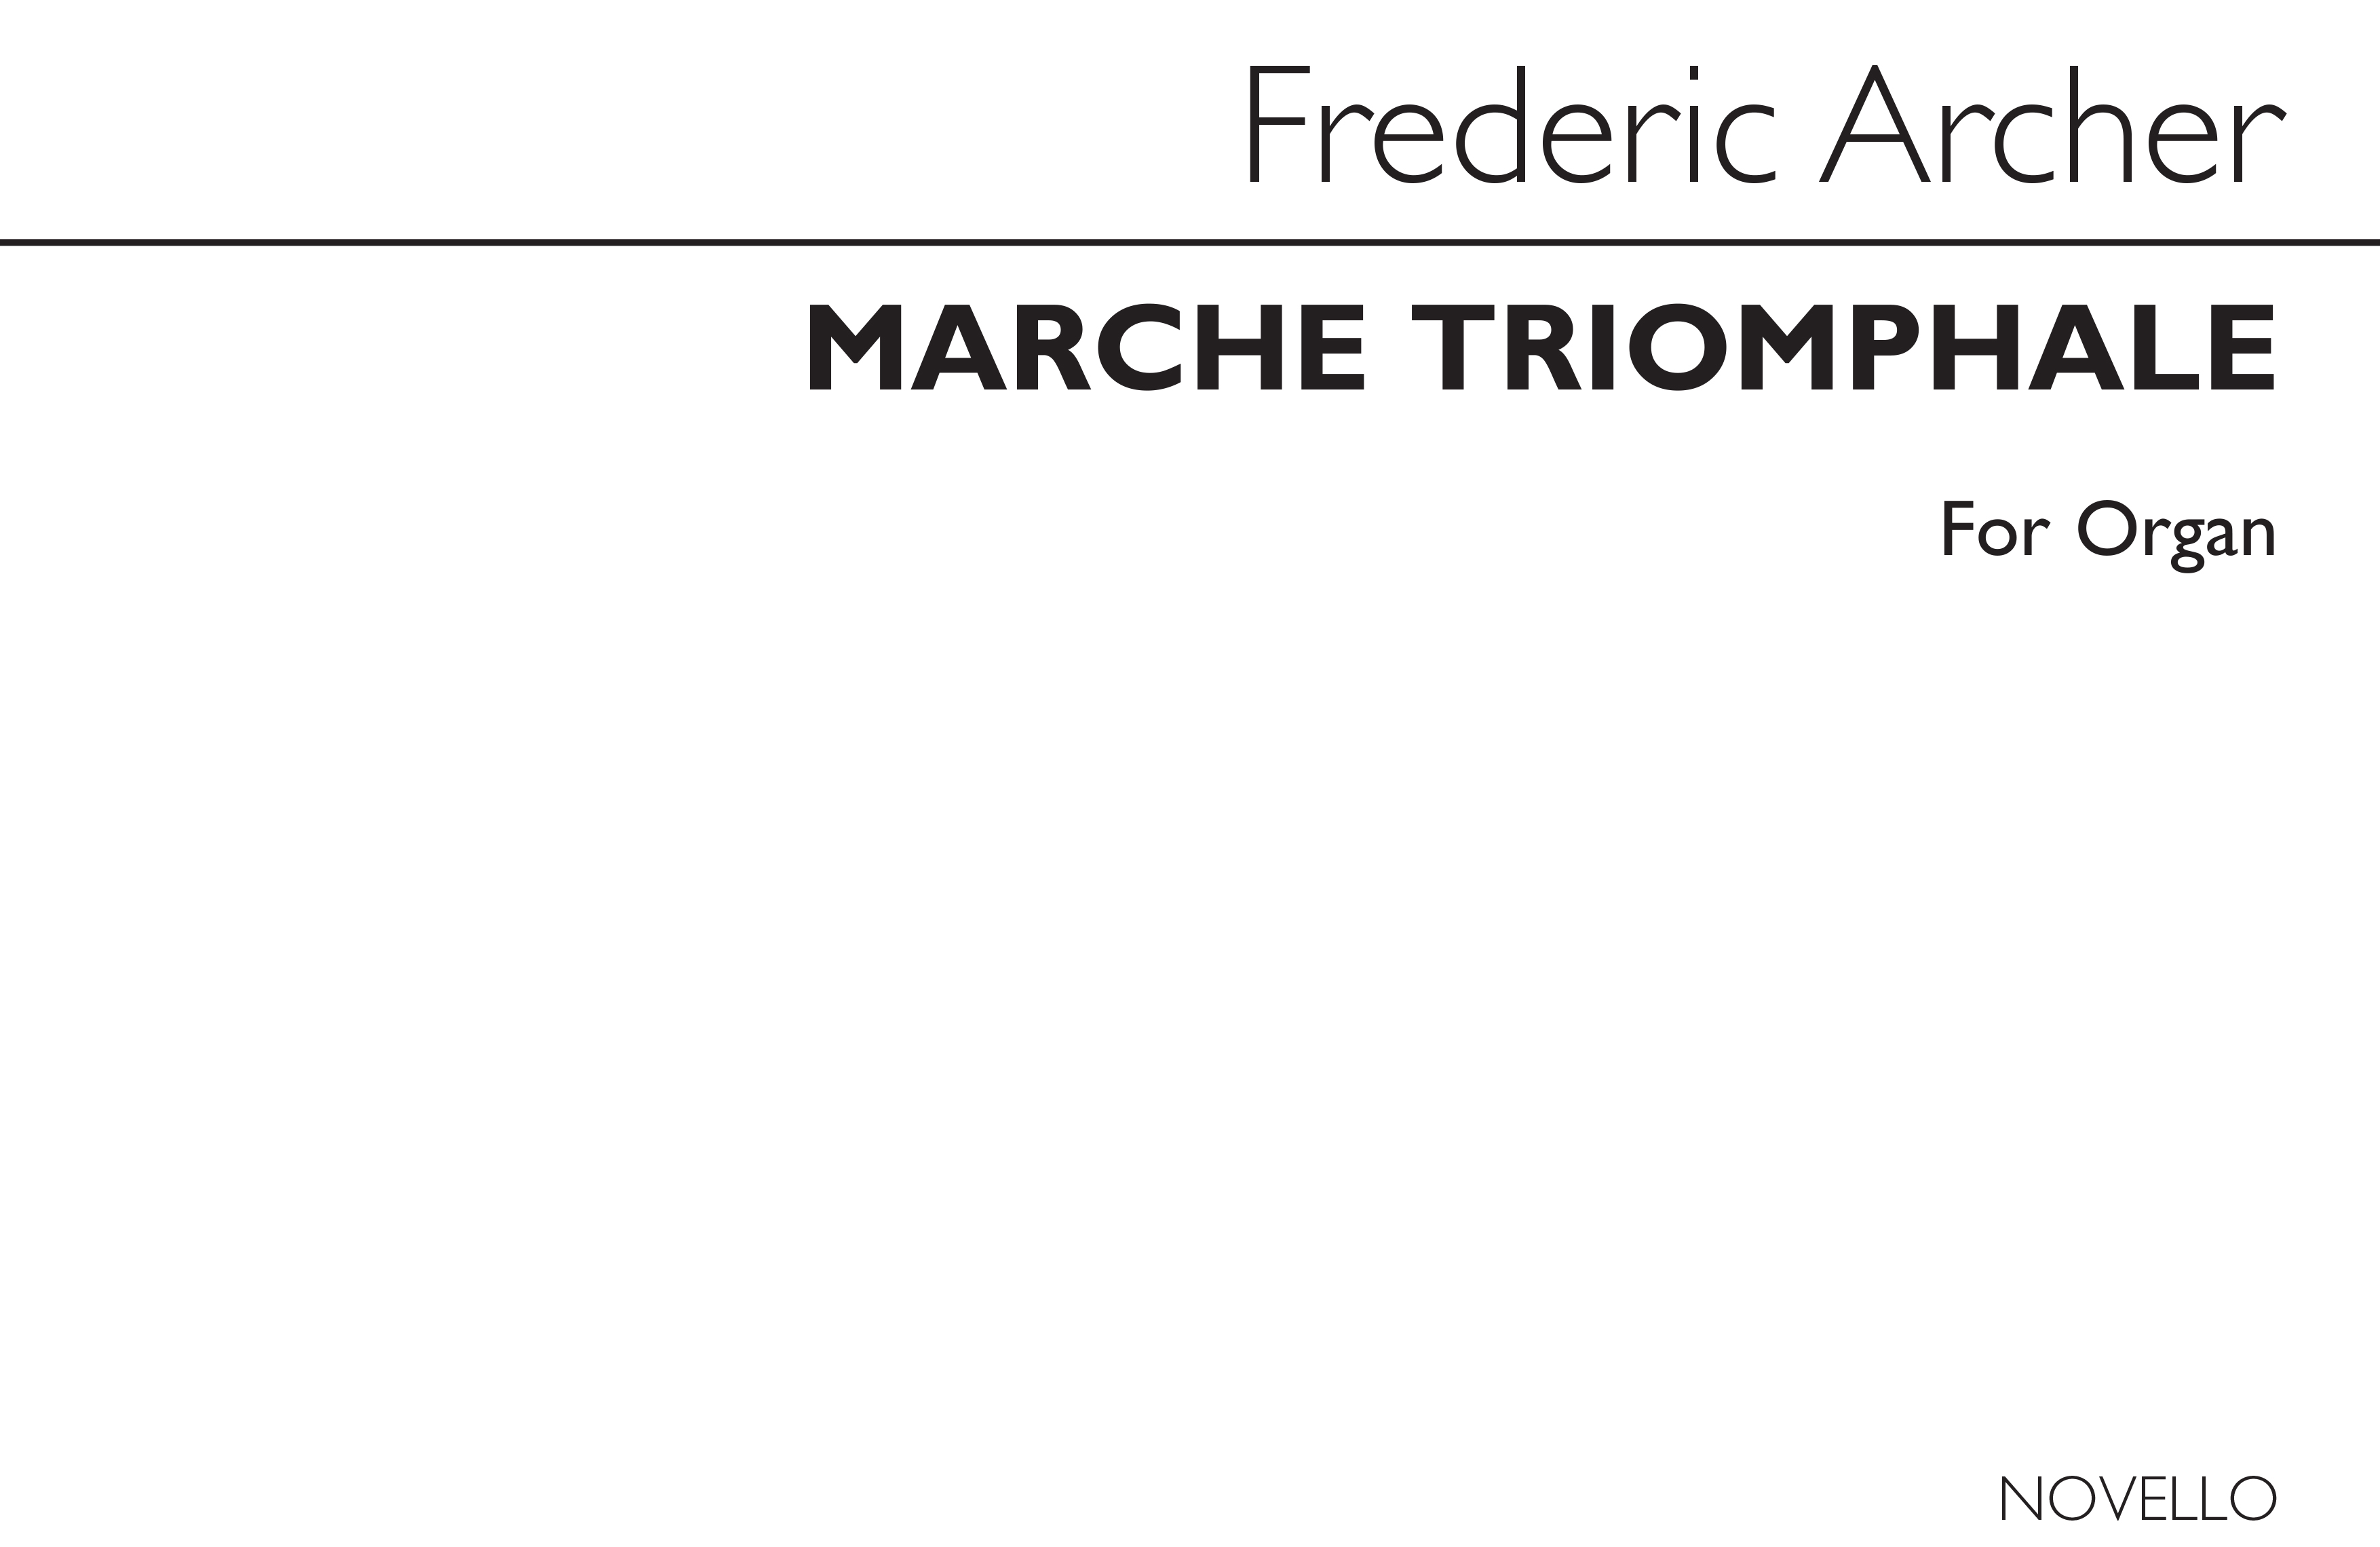 Frederick Archer: March Triomphale For Organ